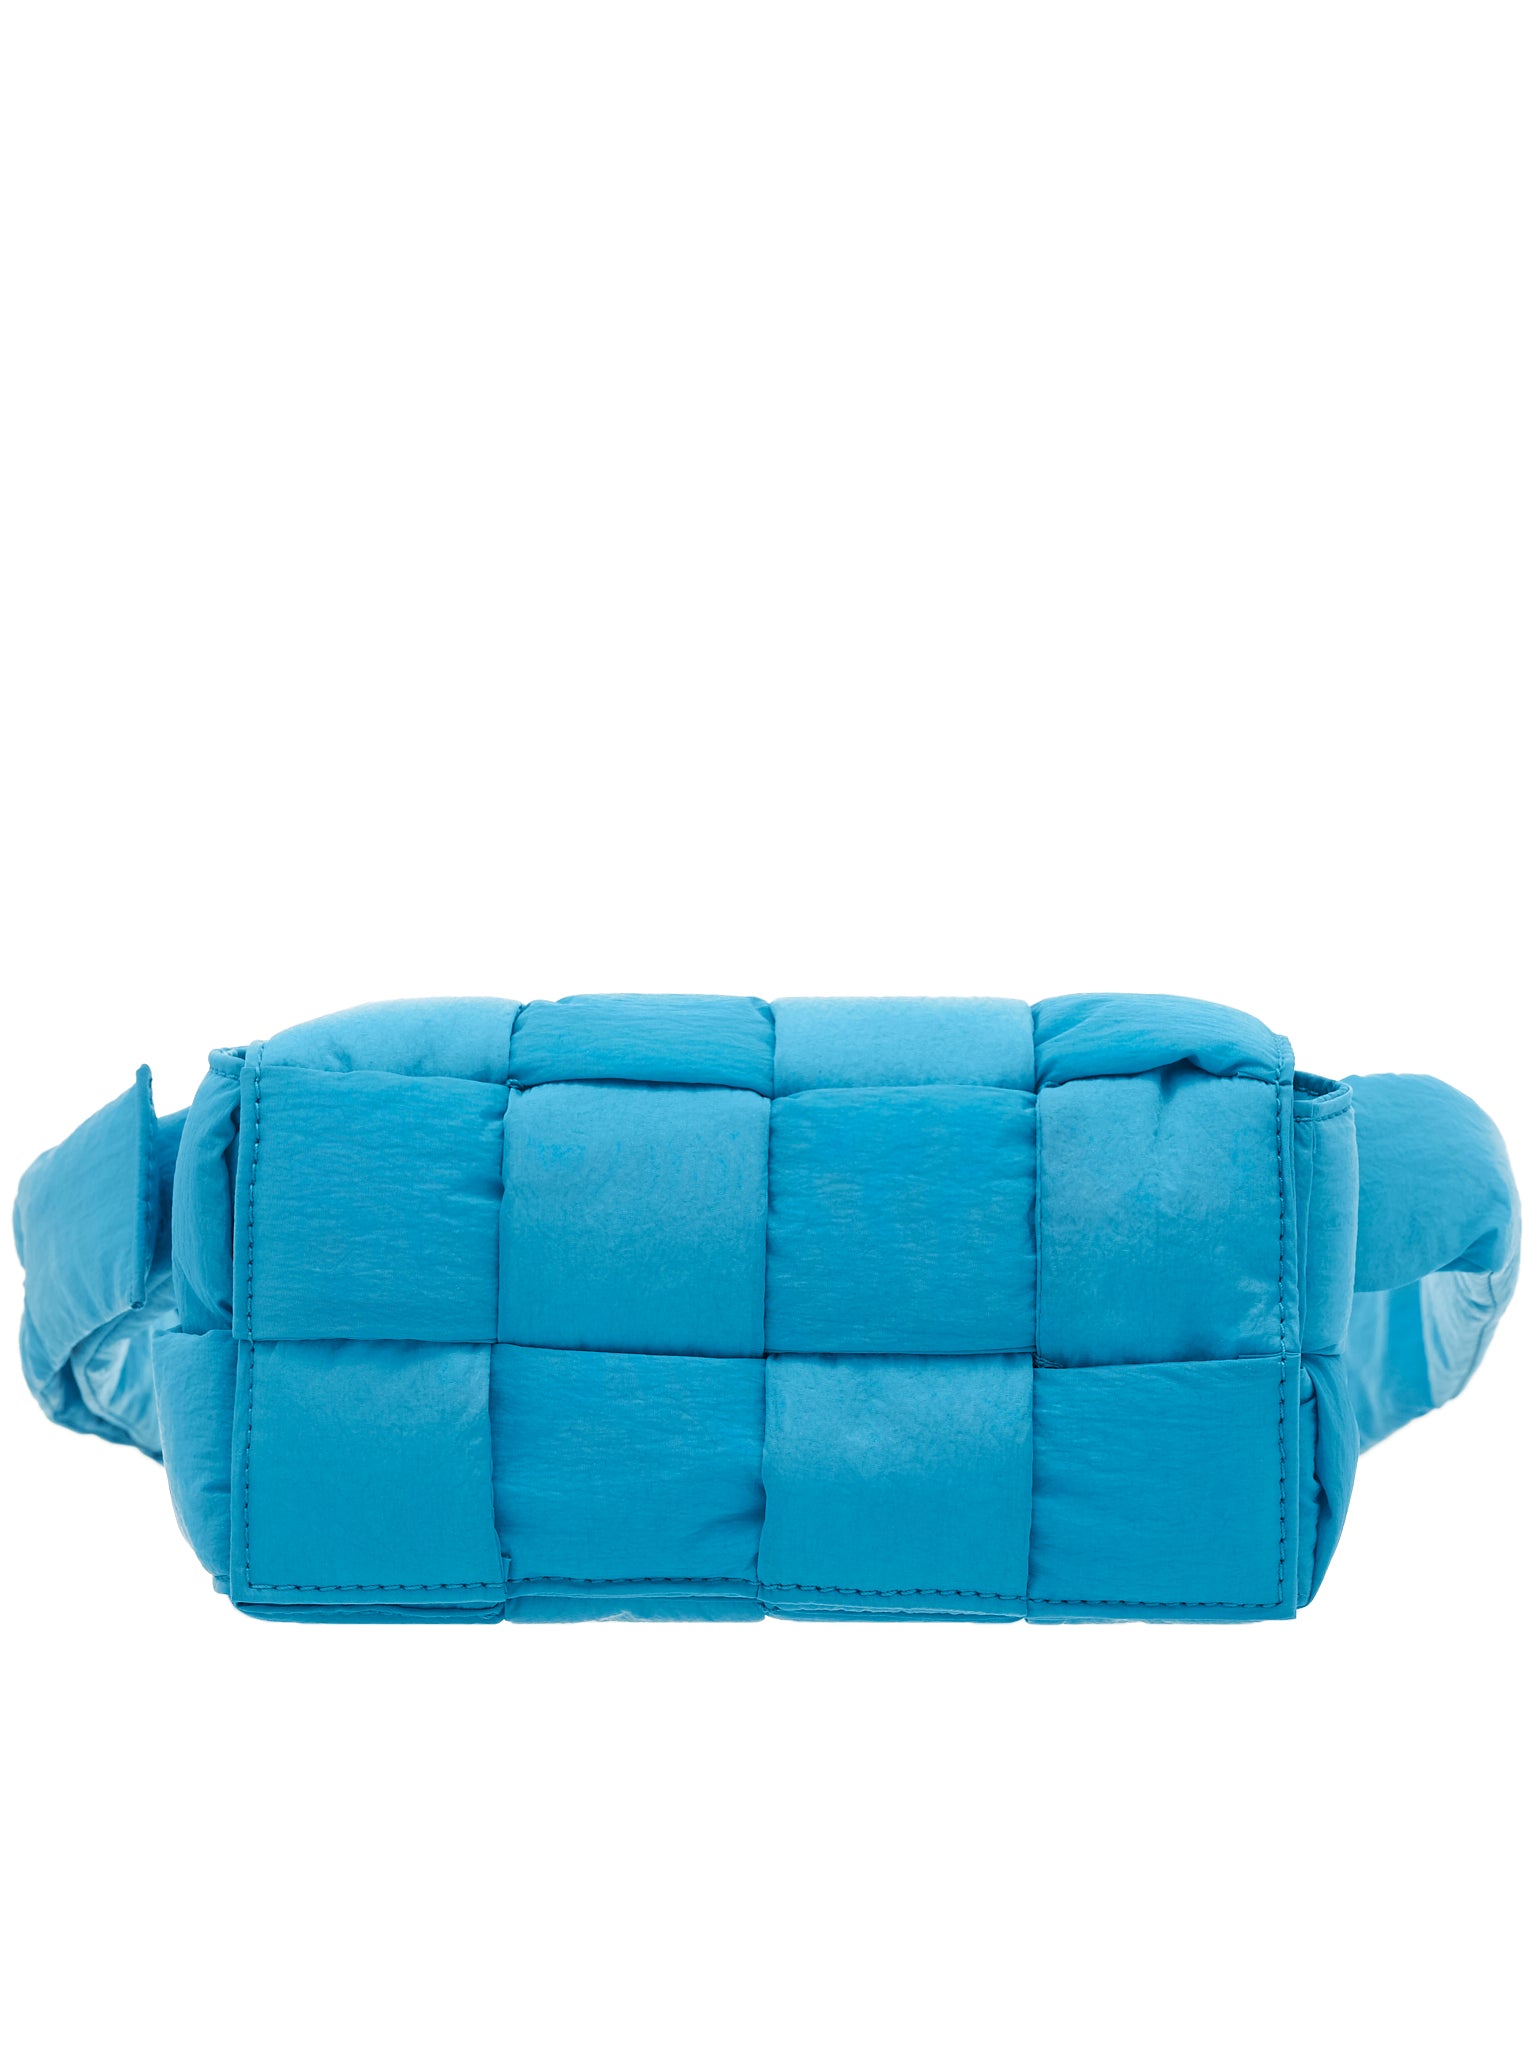 Lot - Bottega Veneta Blue Intrecciato Leather Shoulder Bag